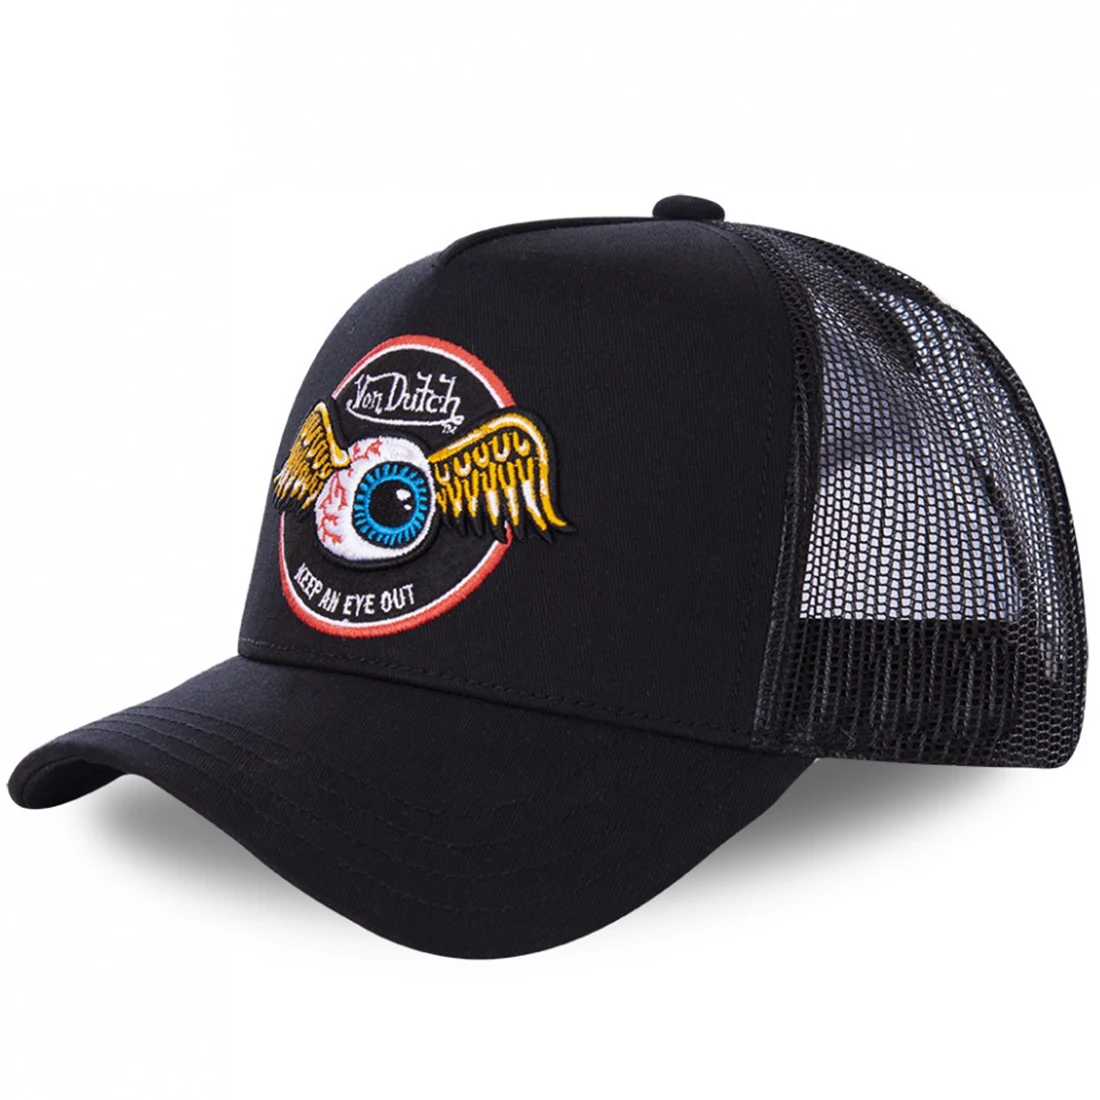  - Summer Embroidery Outdoor Baseball Cap Breathable Trucker Hat Sport Mesh Caps